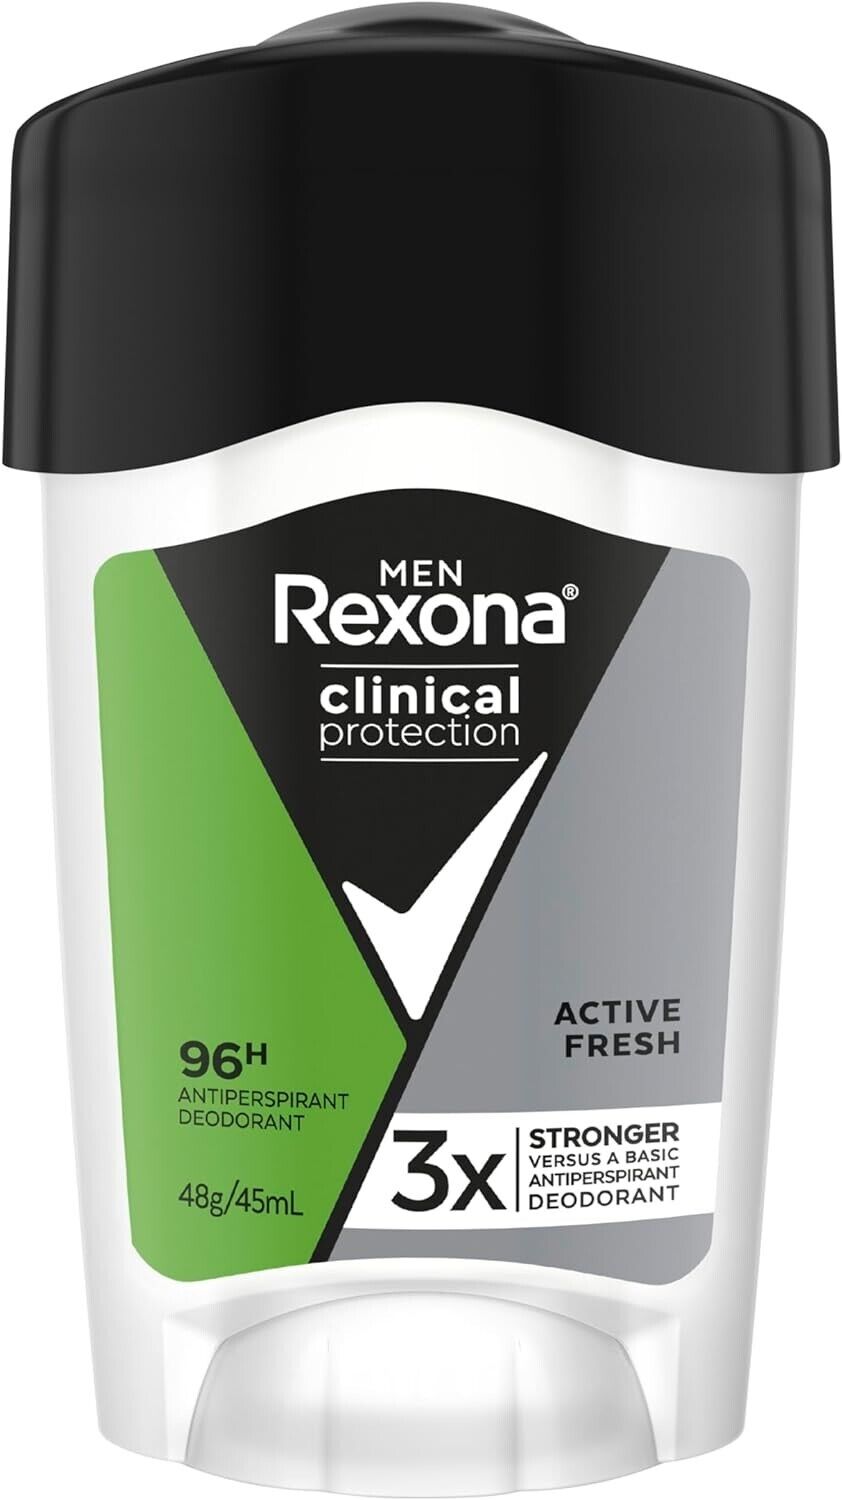 New Rexona Men Active Fresh Clinical Protection Deodorant 45 mL